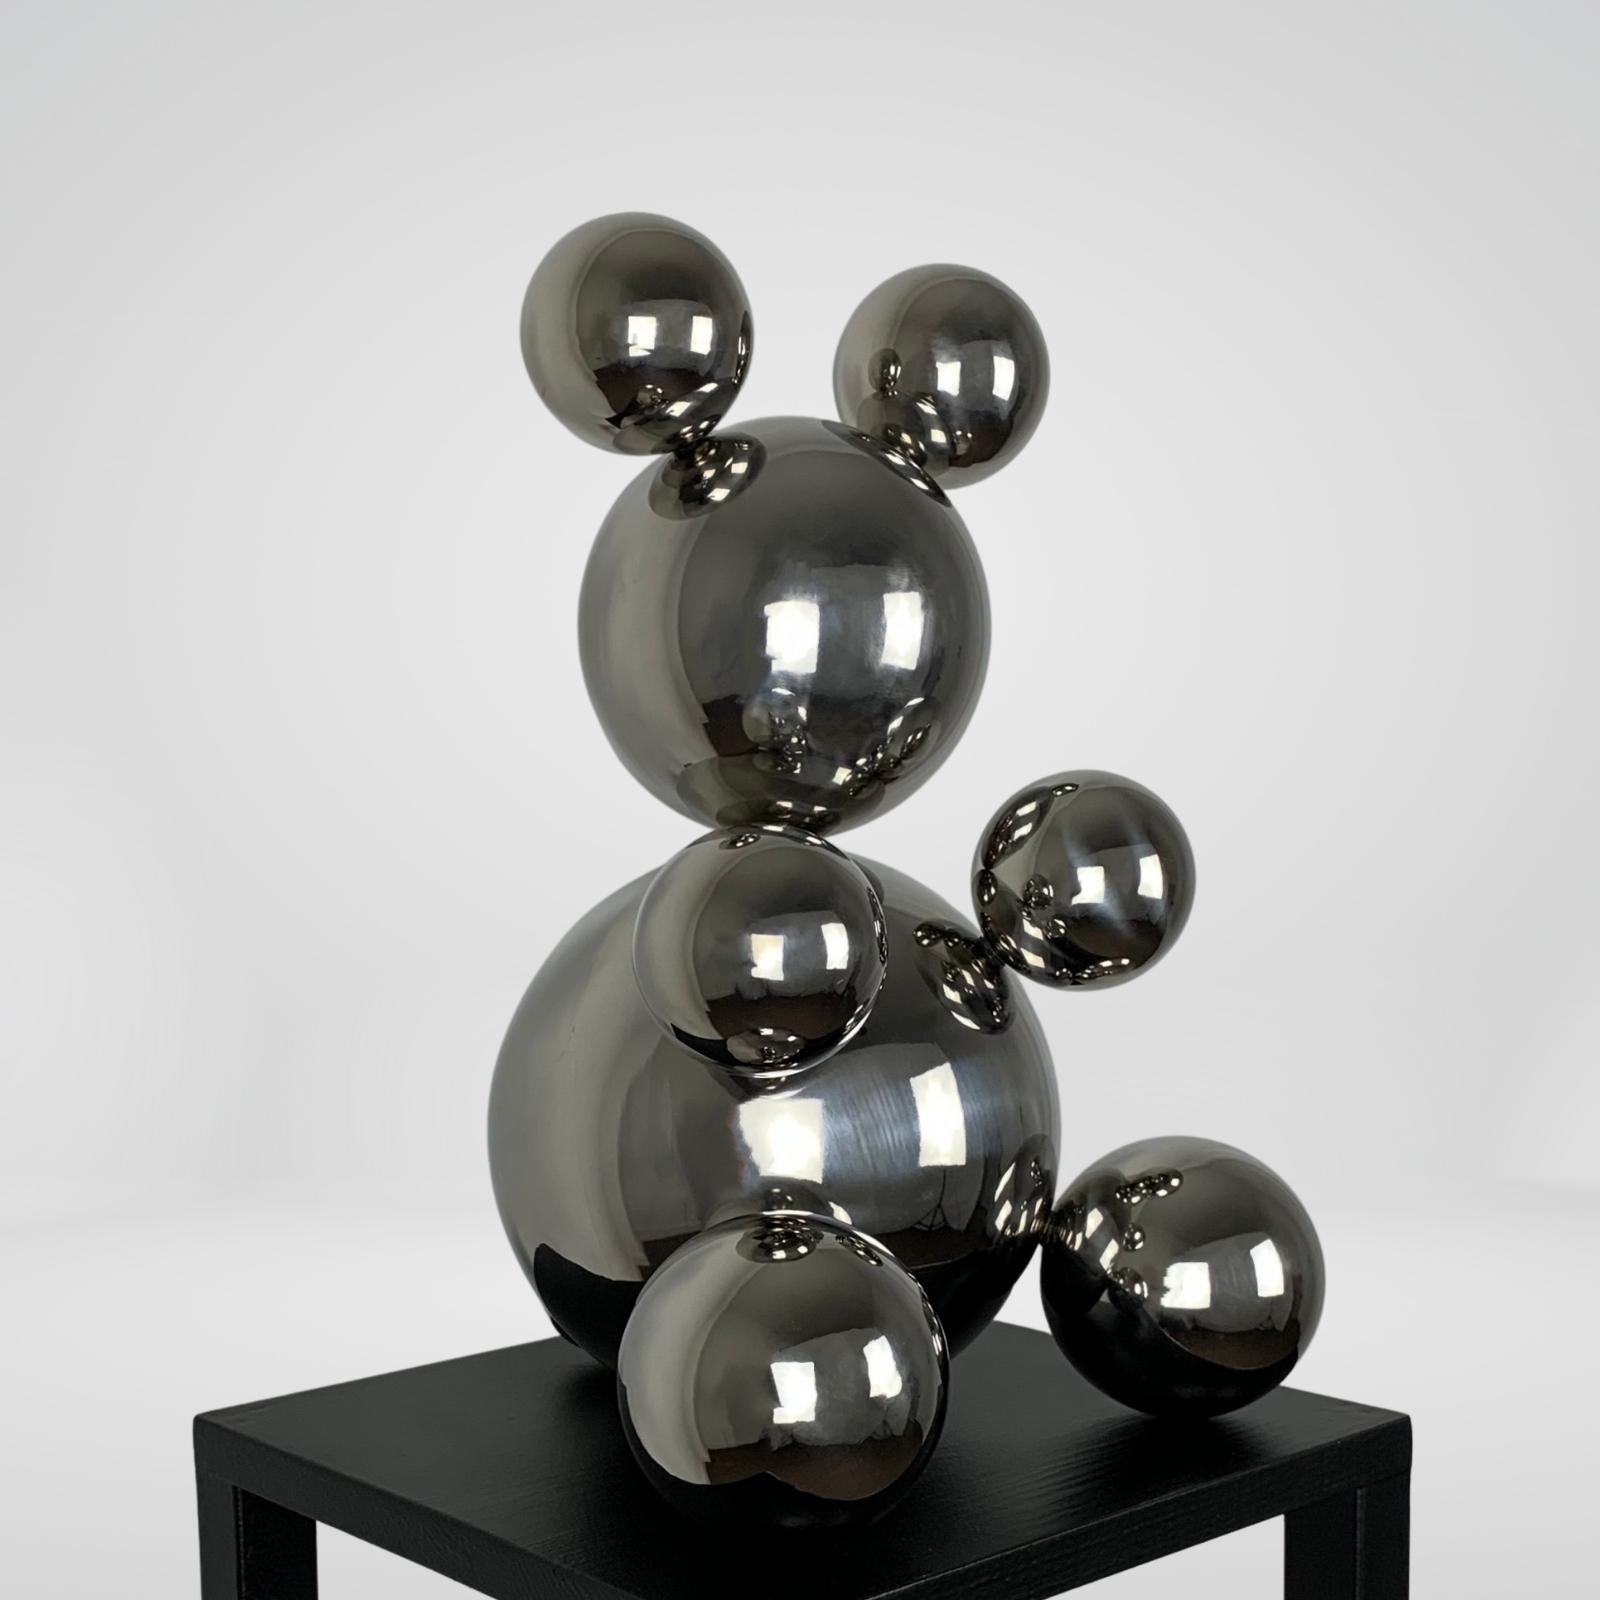 Big Stainless Steel Bear 'Inna' Sculpture Minimalistic Animal Art 2